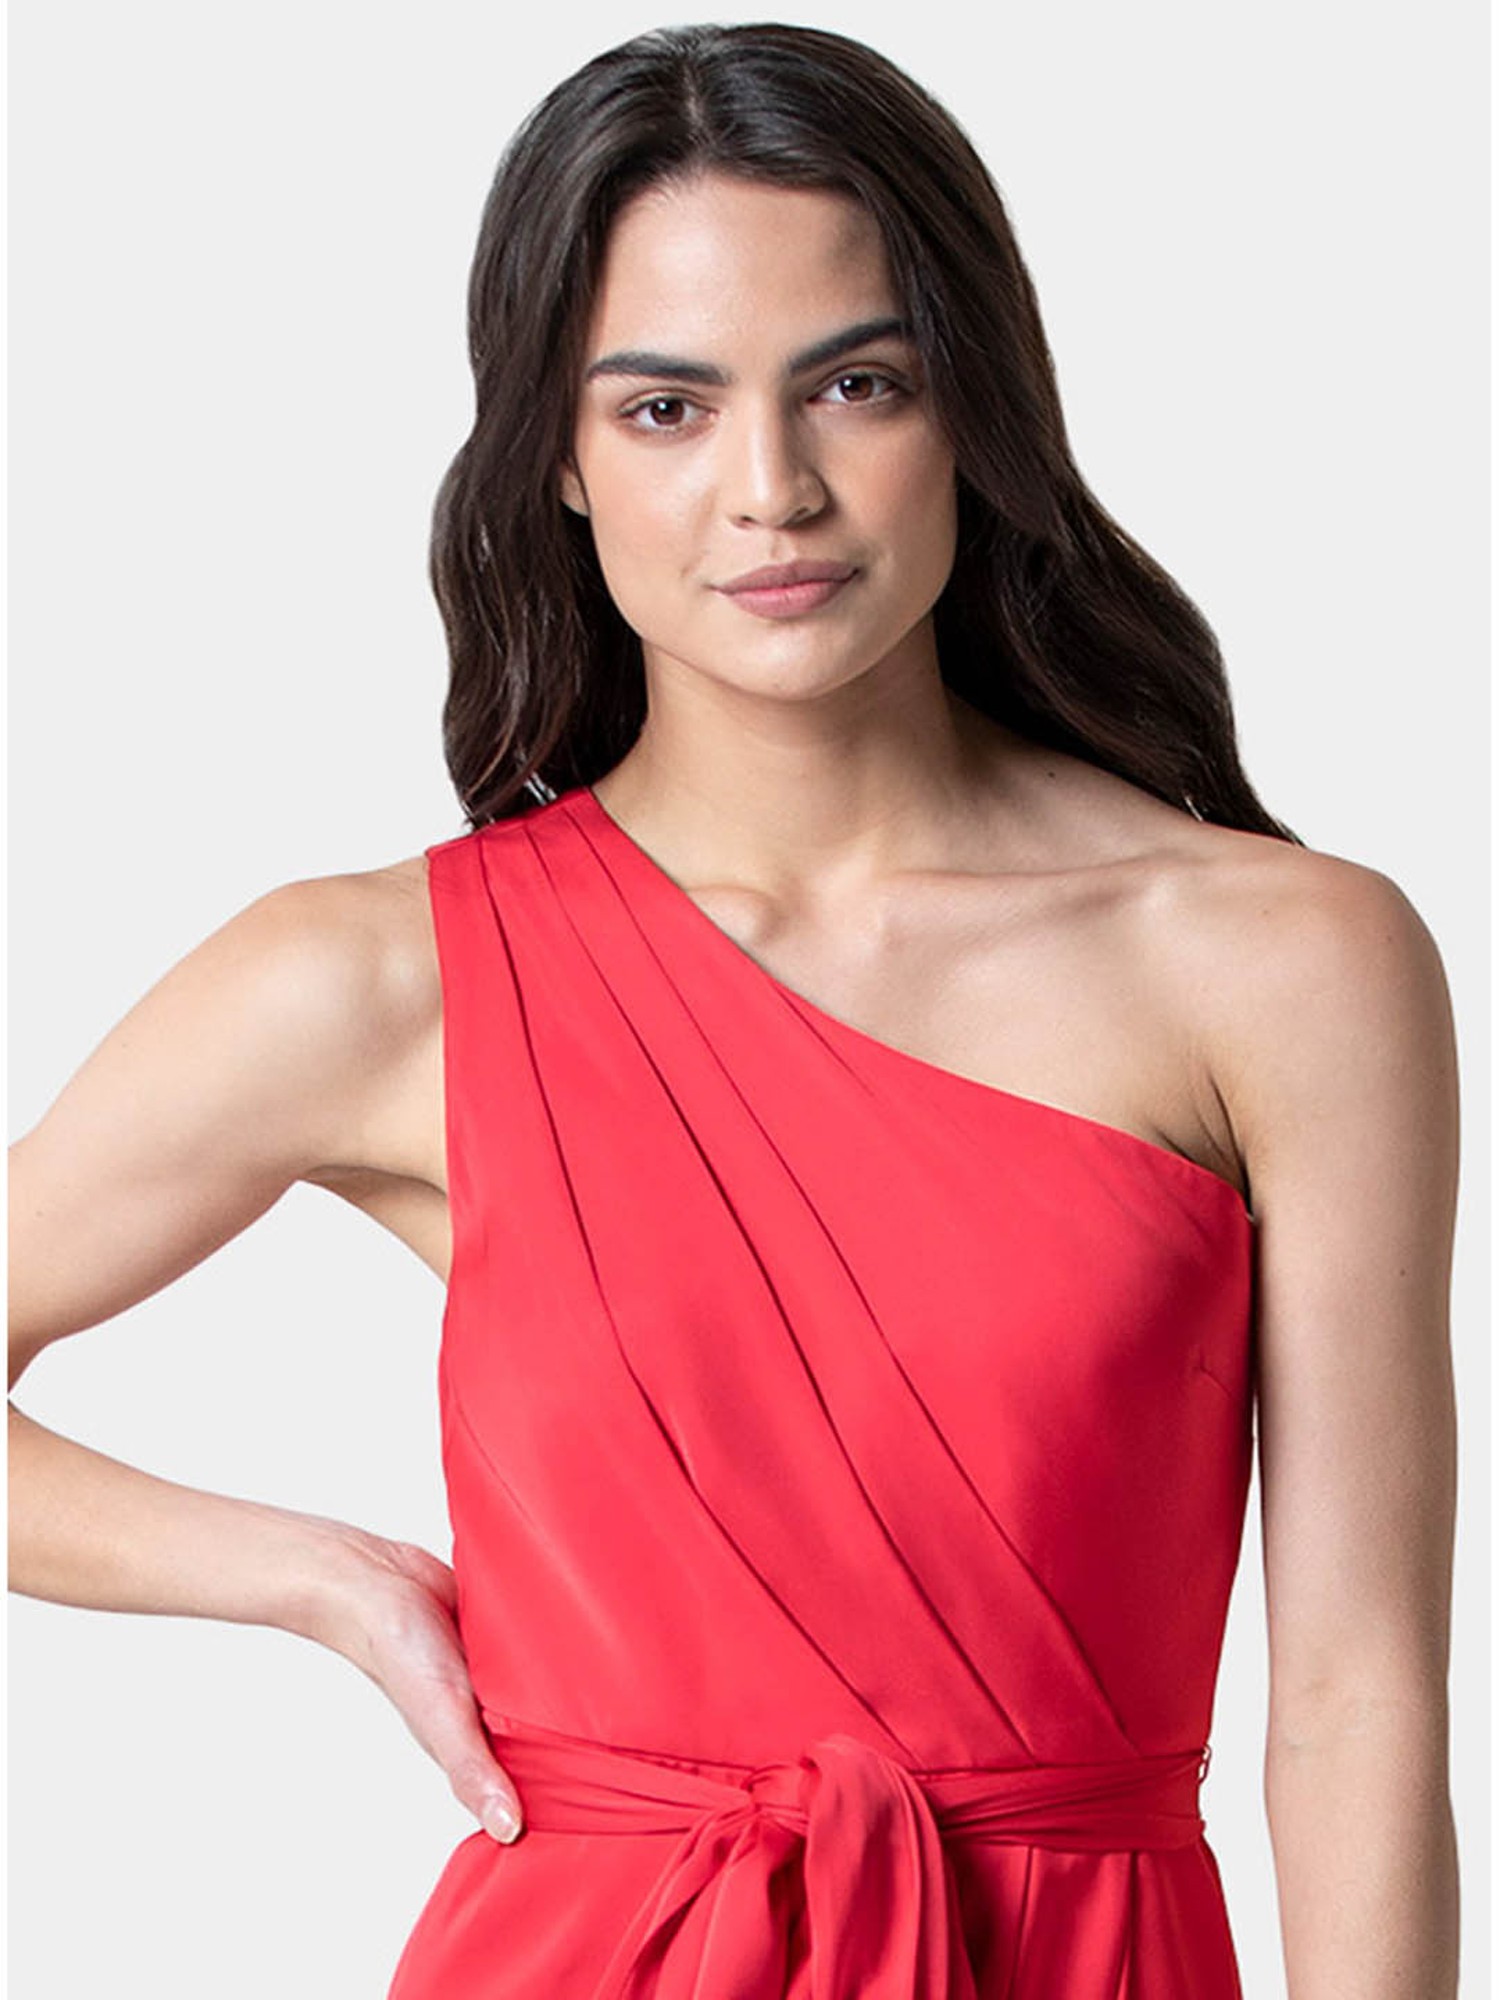 Sydne Style wears elliatt red one shoulder dress for holiday dress ideas   Sydne Style